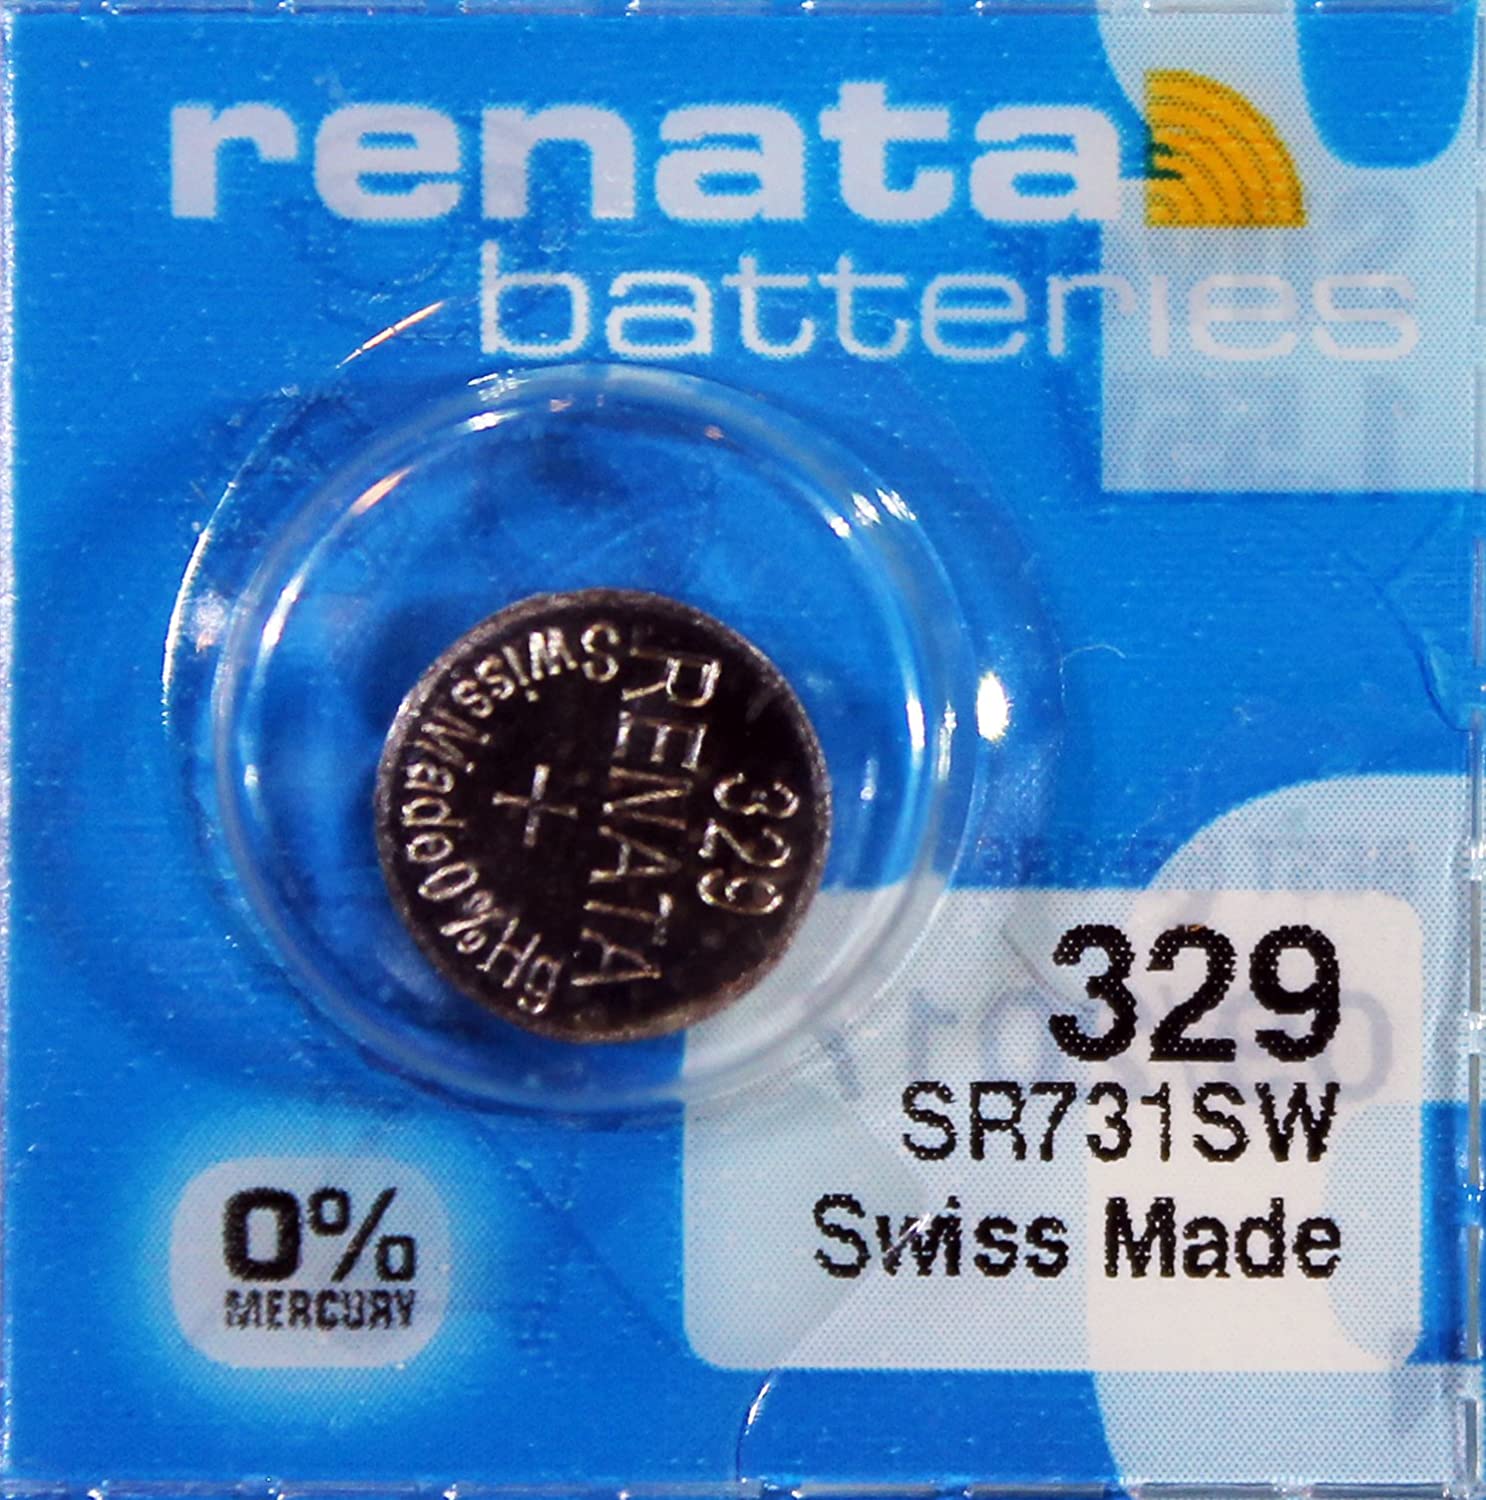  renata SR731SW 1個 バラ売り 329 コイン型 酸化銀ボタン電池 時計用電池 電子機器など(3452-01)Y